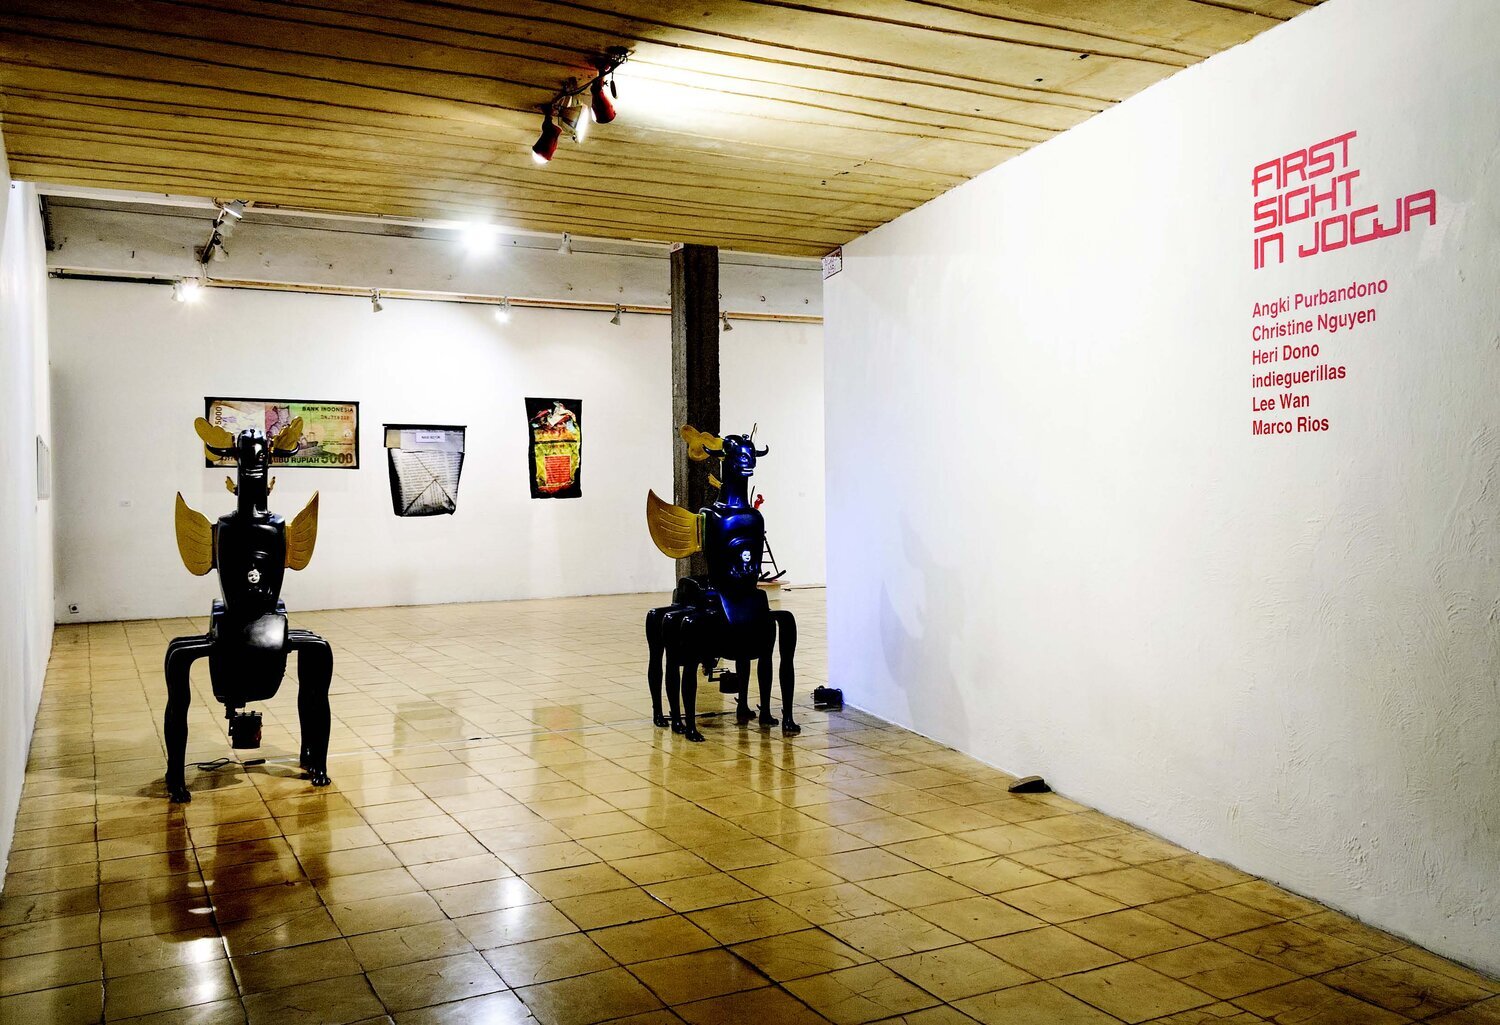 Installation of, First Site in Jogja at Cementi Art Center, Works by Marco Rios, Christine Nguyen, Lee Wan, Angki Purbandono, Heri Dono, Indieguerillas, Baik Art, 2016, 8.jpg